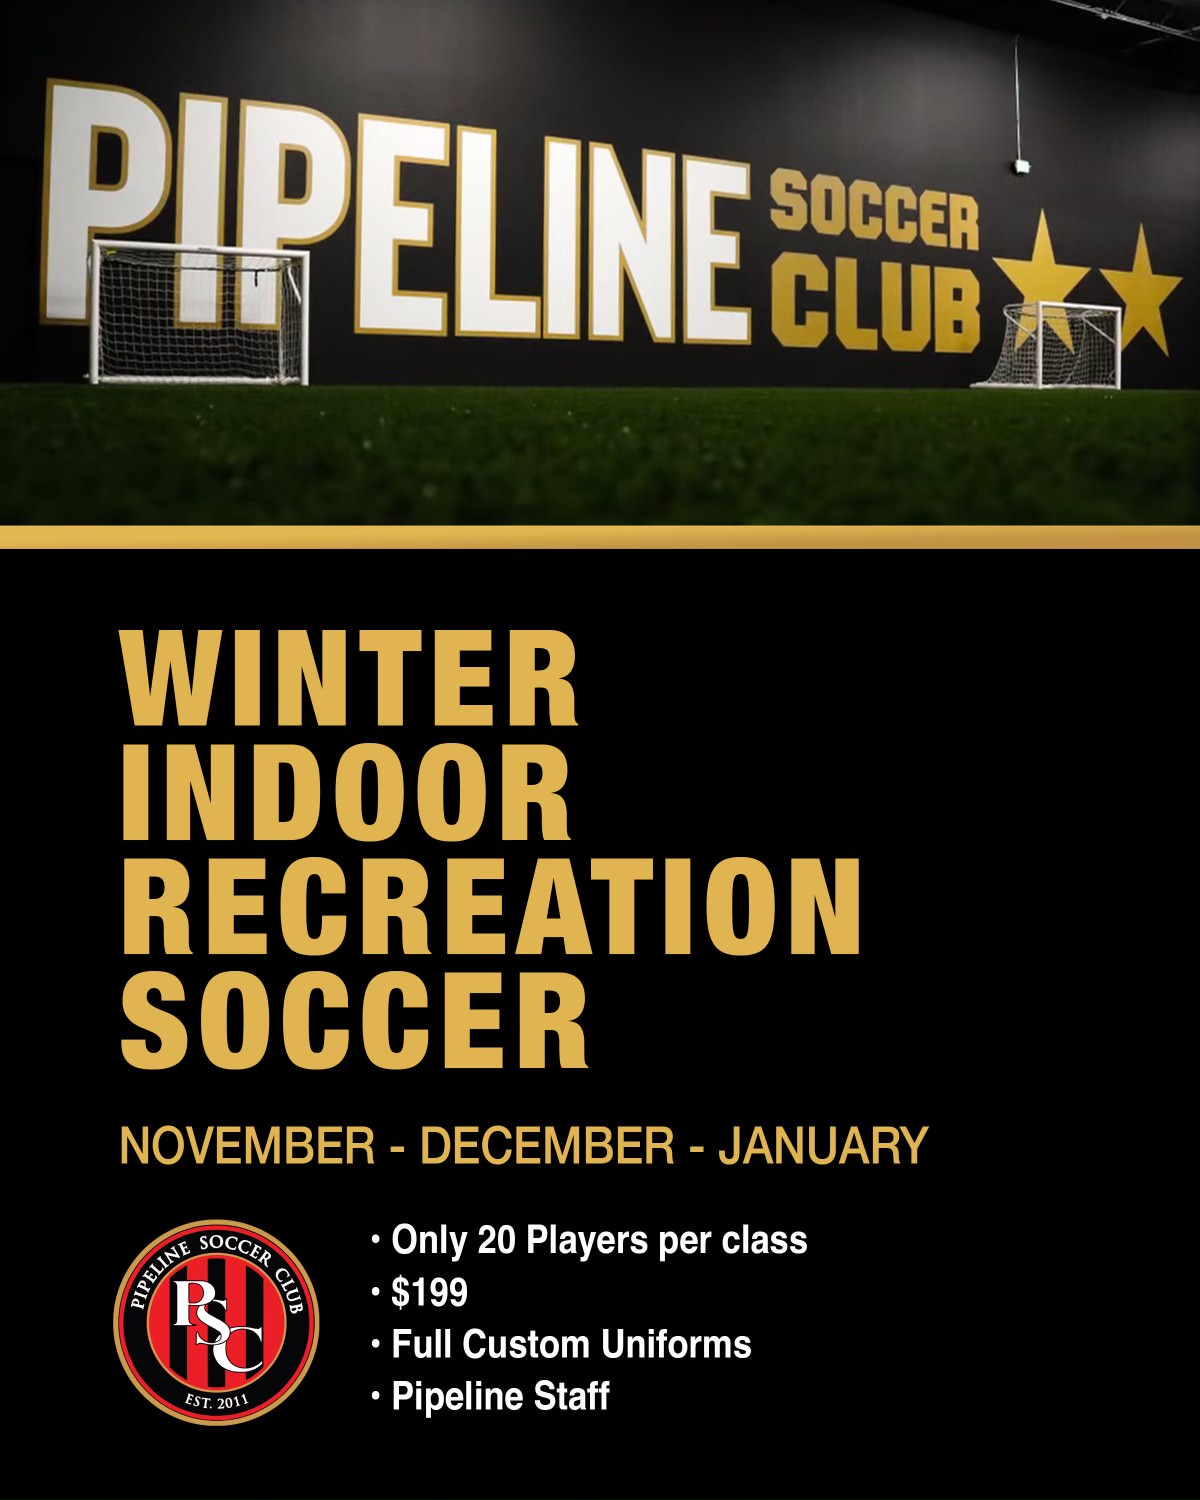 Winter Recreation Program (PDA) Registration Available